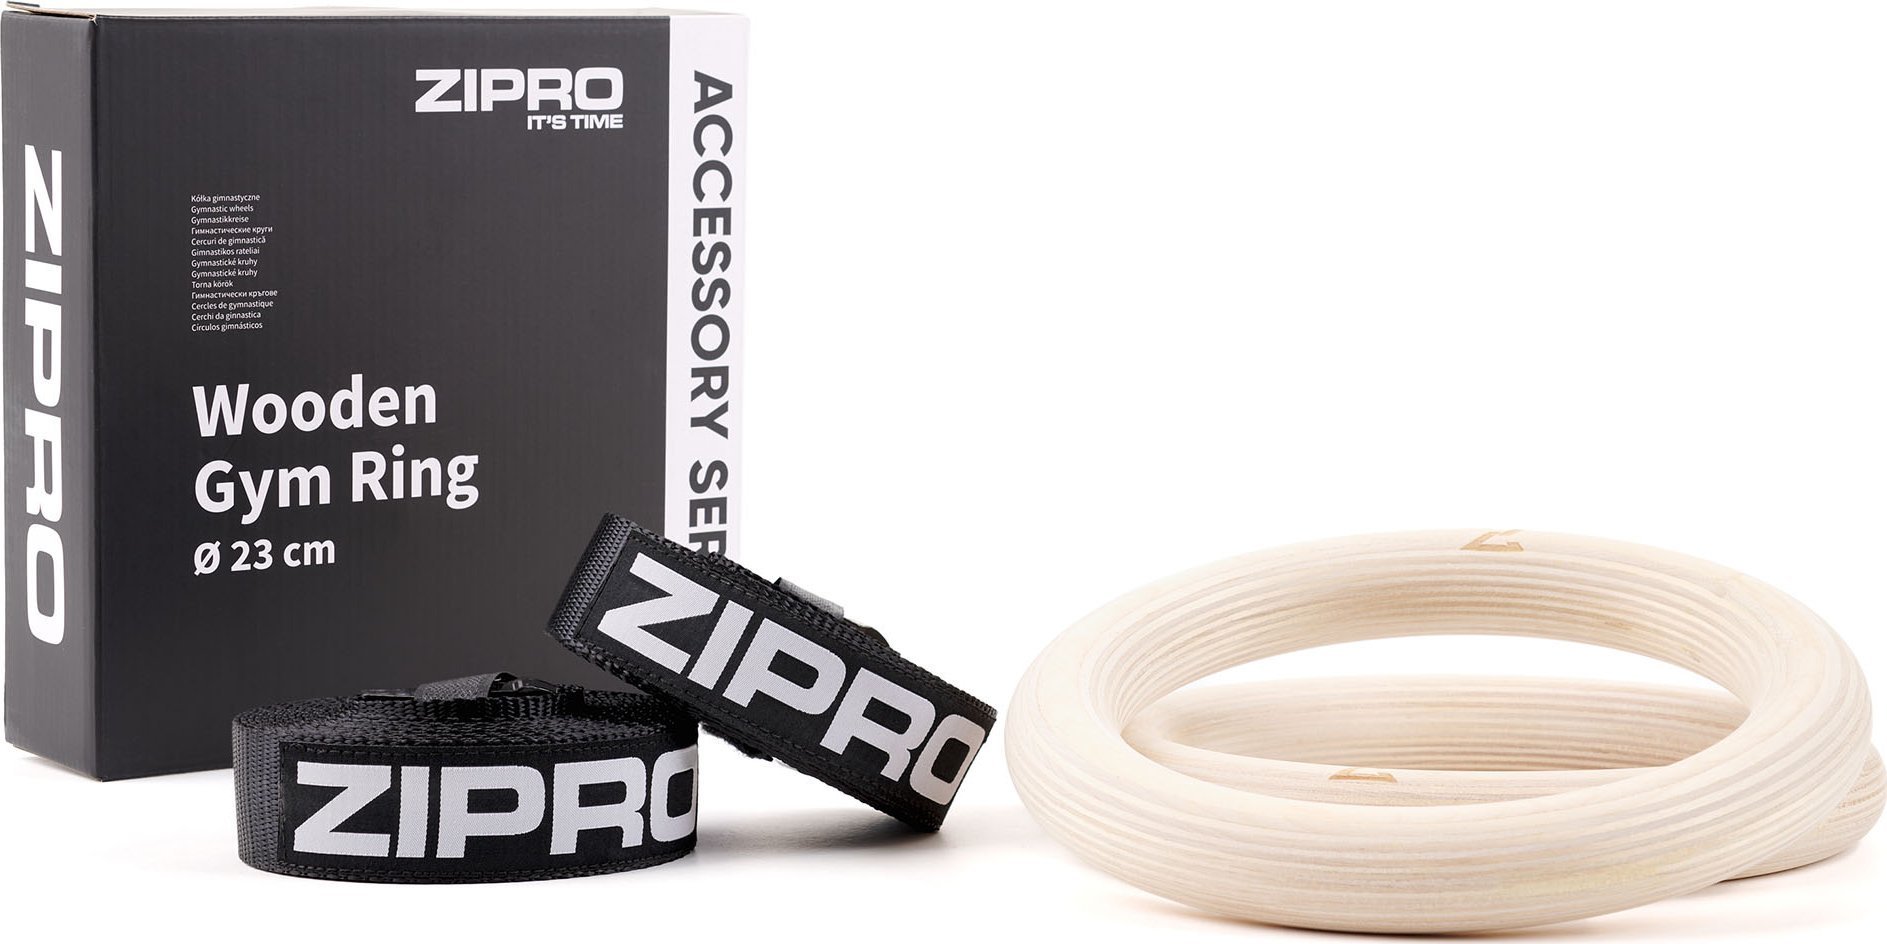 Zipro ZIPRO WOODEN RING WOODEN RING:23CM*3.2CM, BAND: 3.8*460CM WOOD